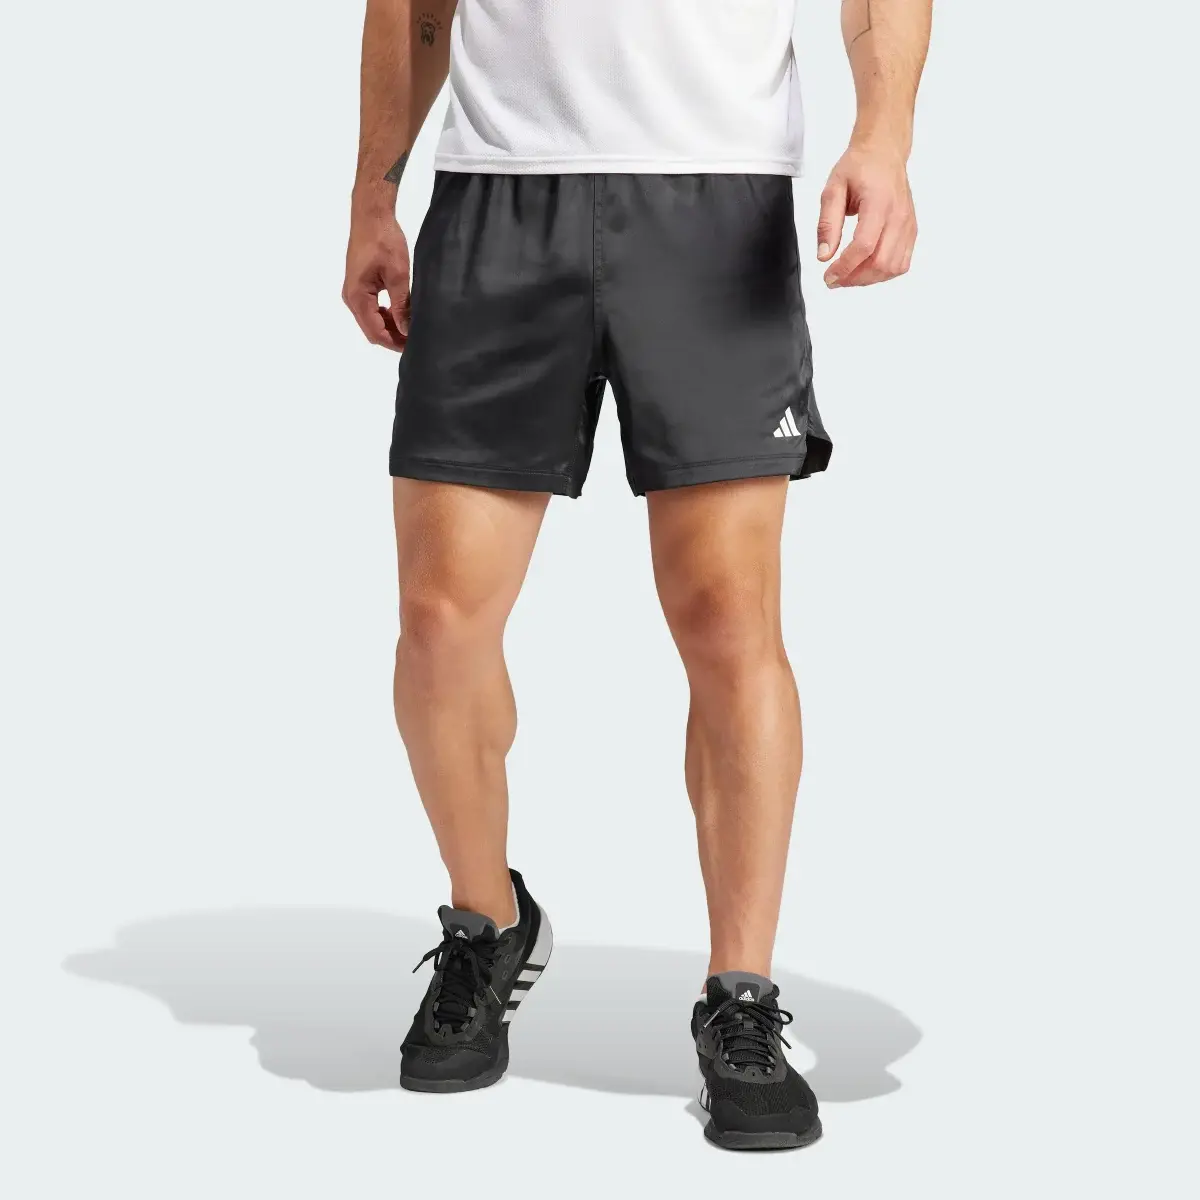 Adidas Power Workout Shorts. 1